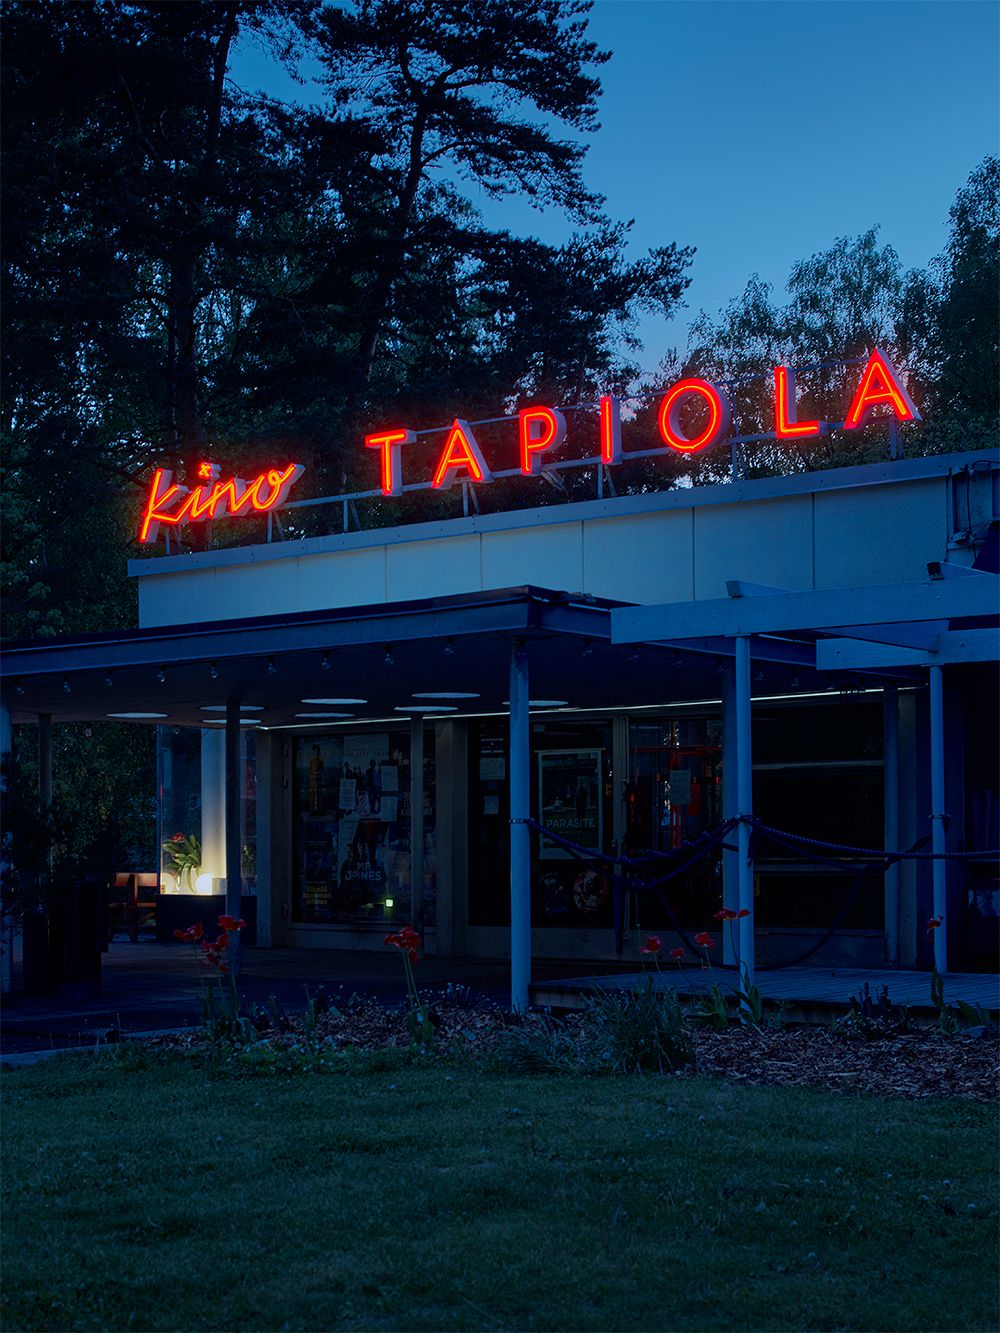 Kino Tapiola